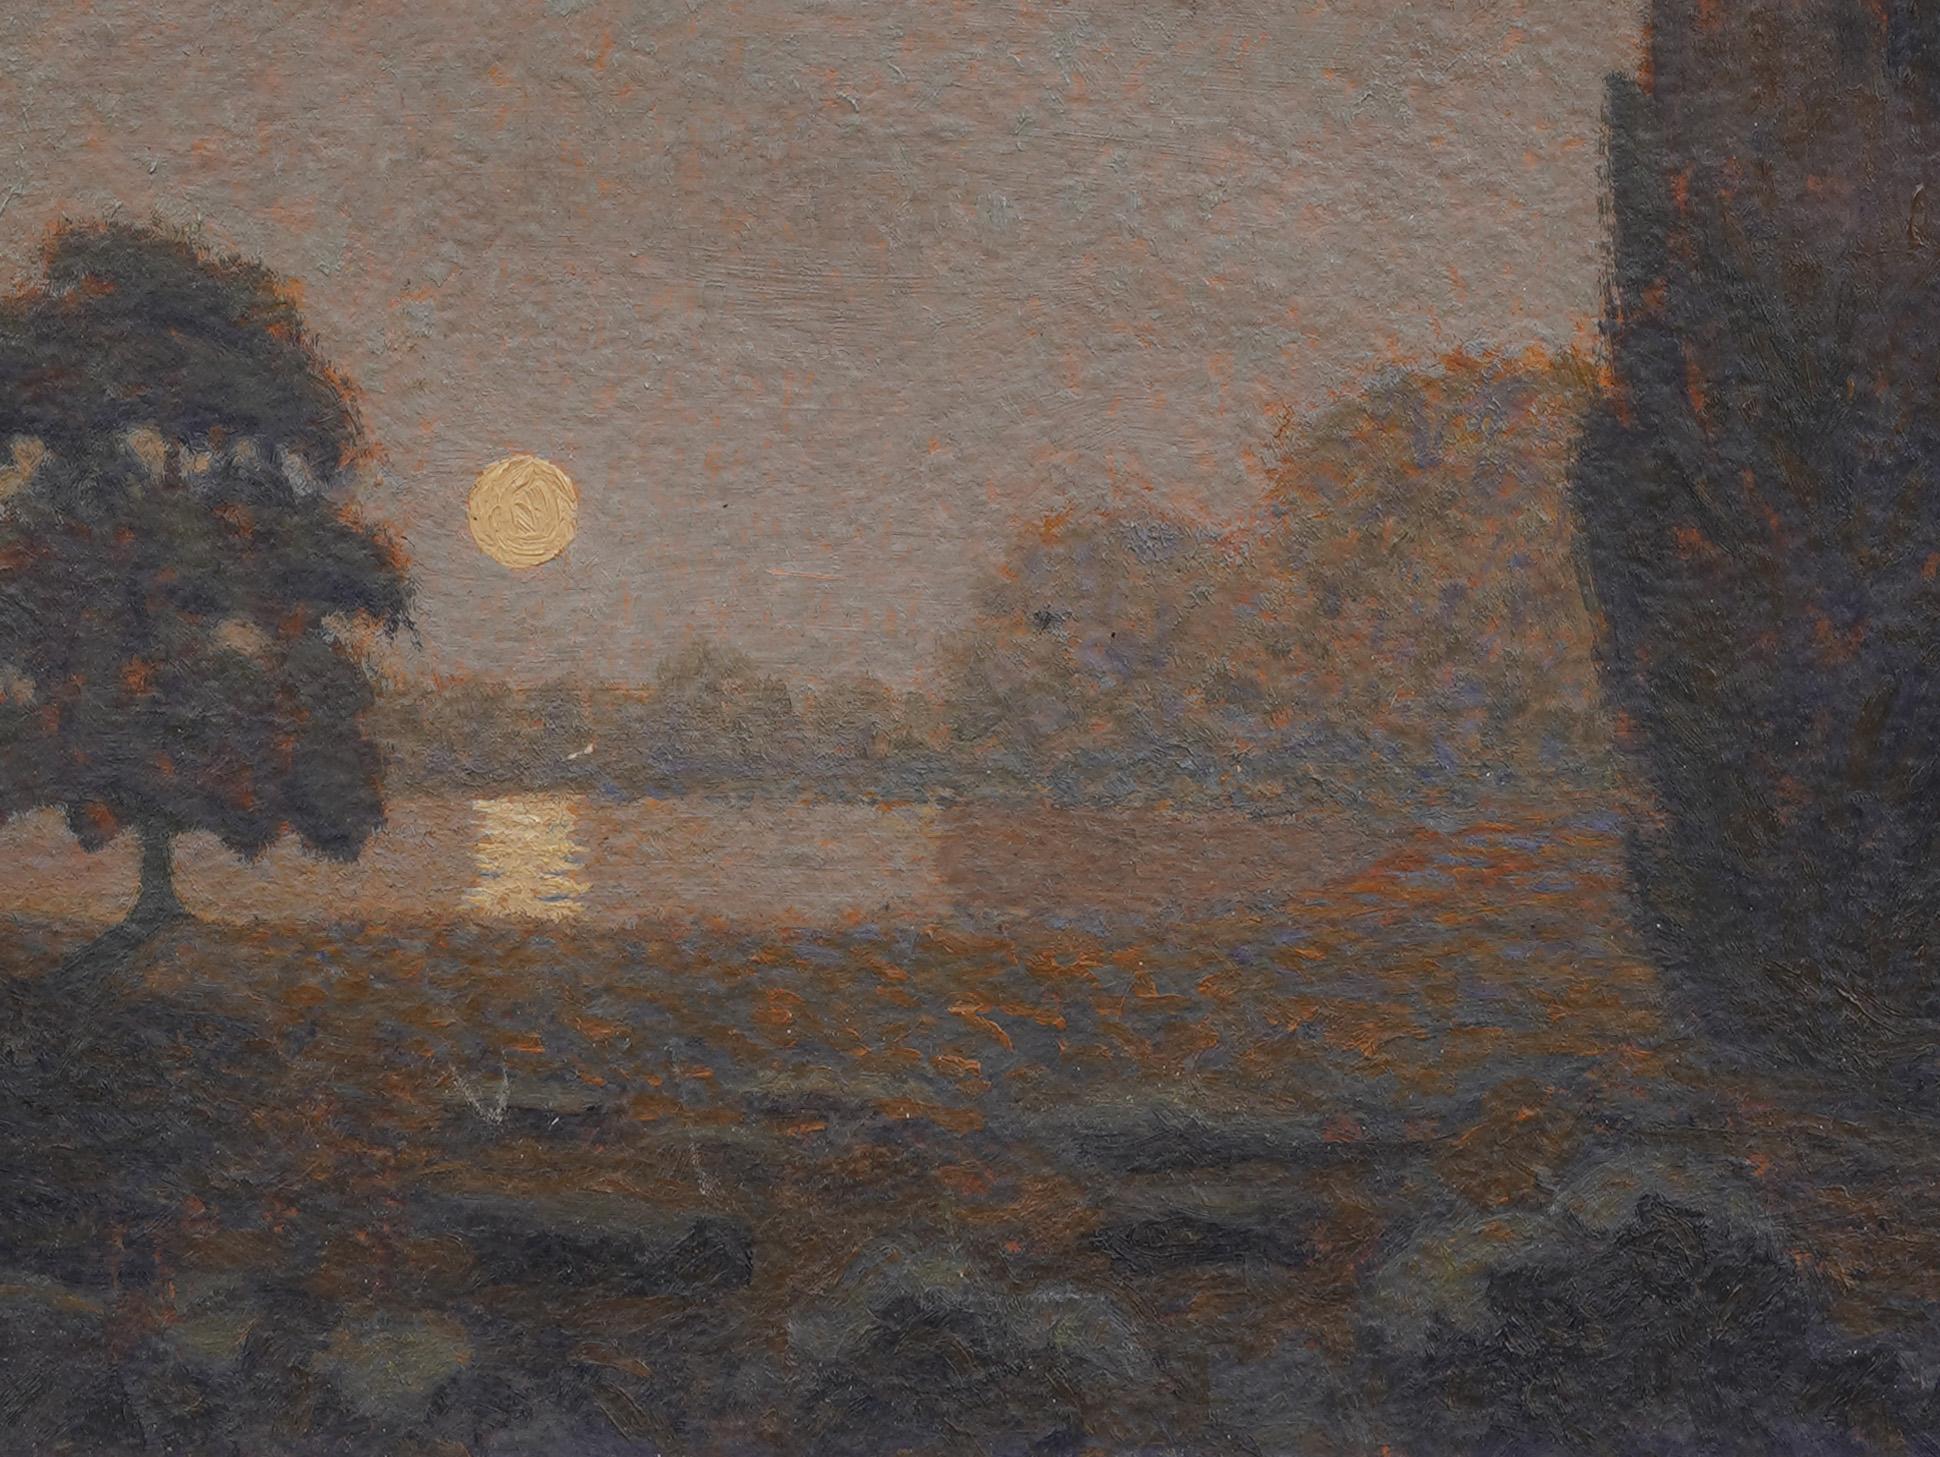 Antique American Moonlit Nocturnal Lake View Signed Framed Landscape Painting 4